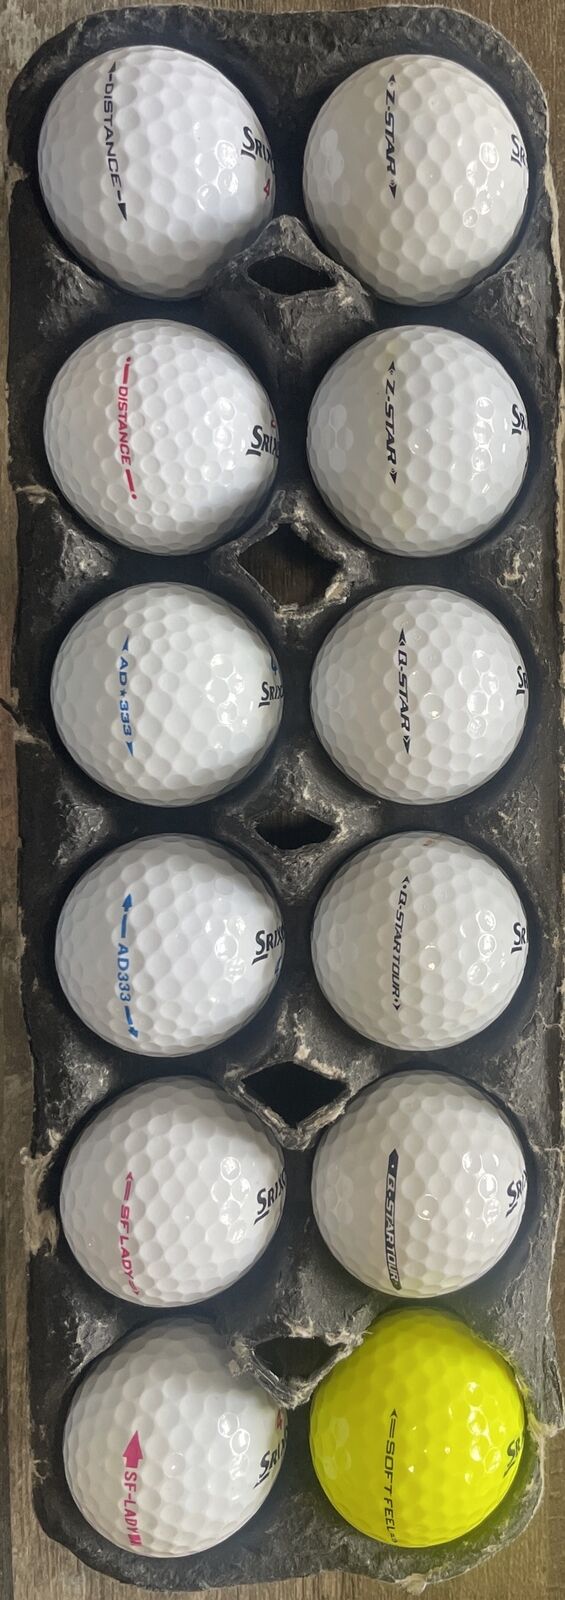 Srixon Z Star/Q Star Golf Balls - 12 Used - Great Condition